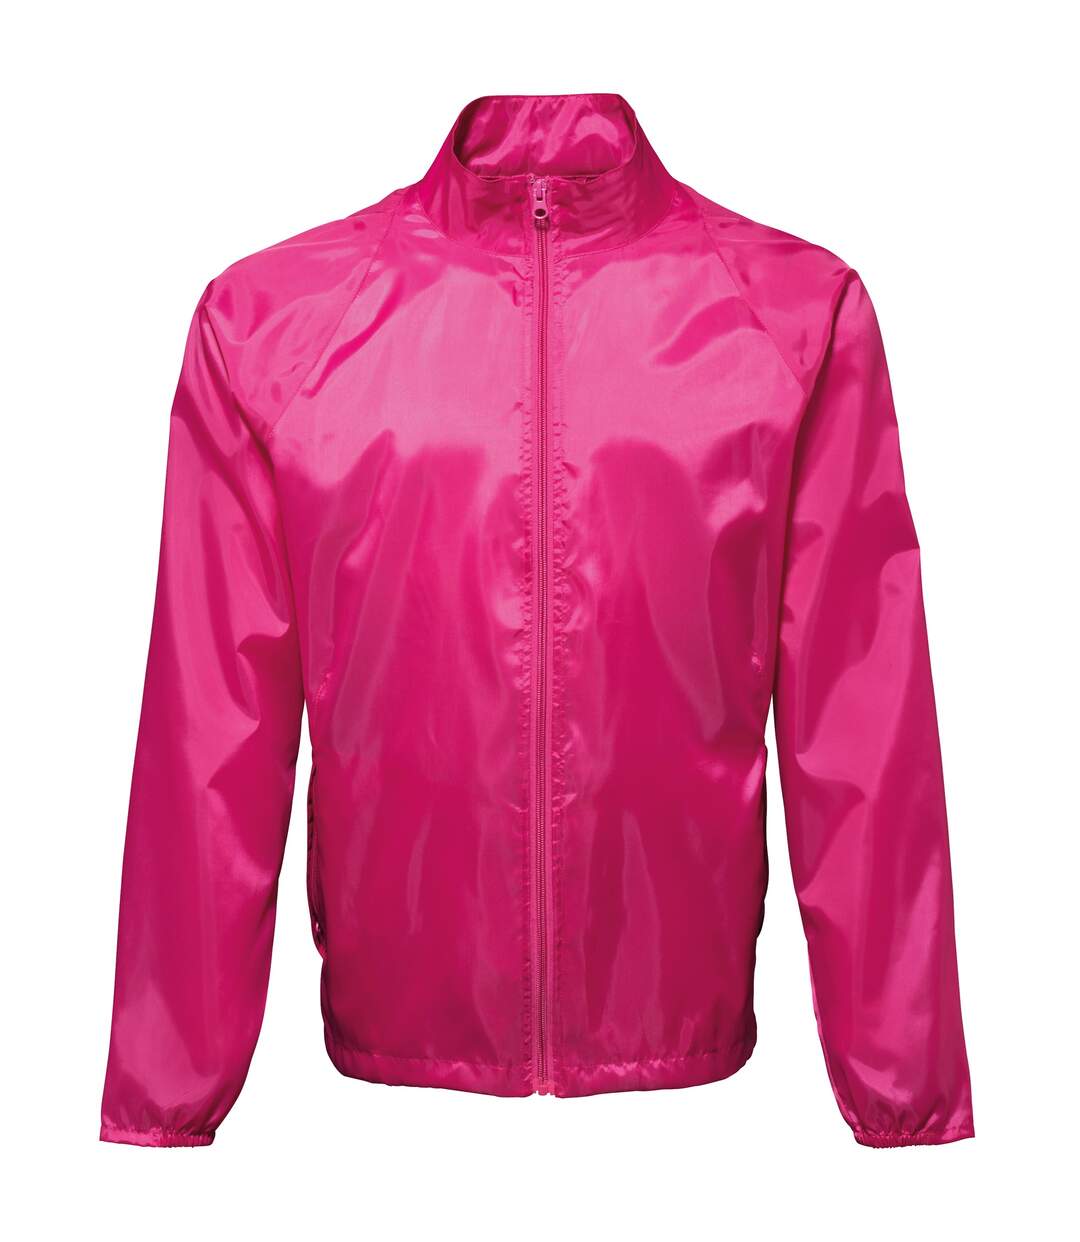 2786 Unisex Lightweight Plain Wind & Shower Resistant Jacket (Hot Pink) - UTRW2500